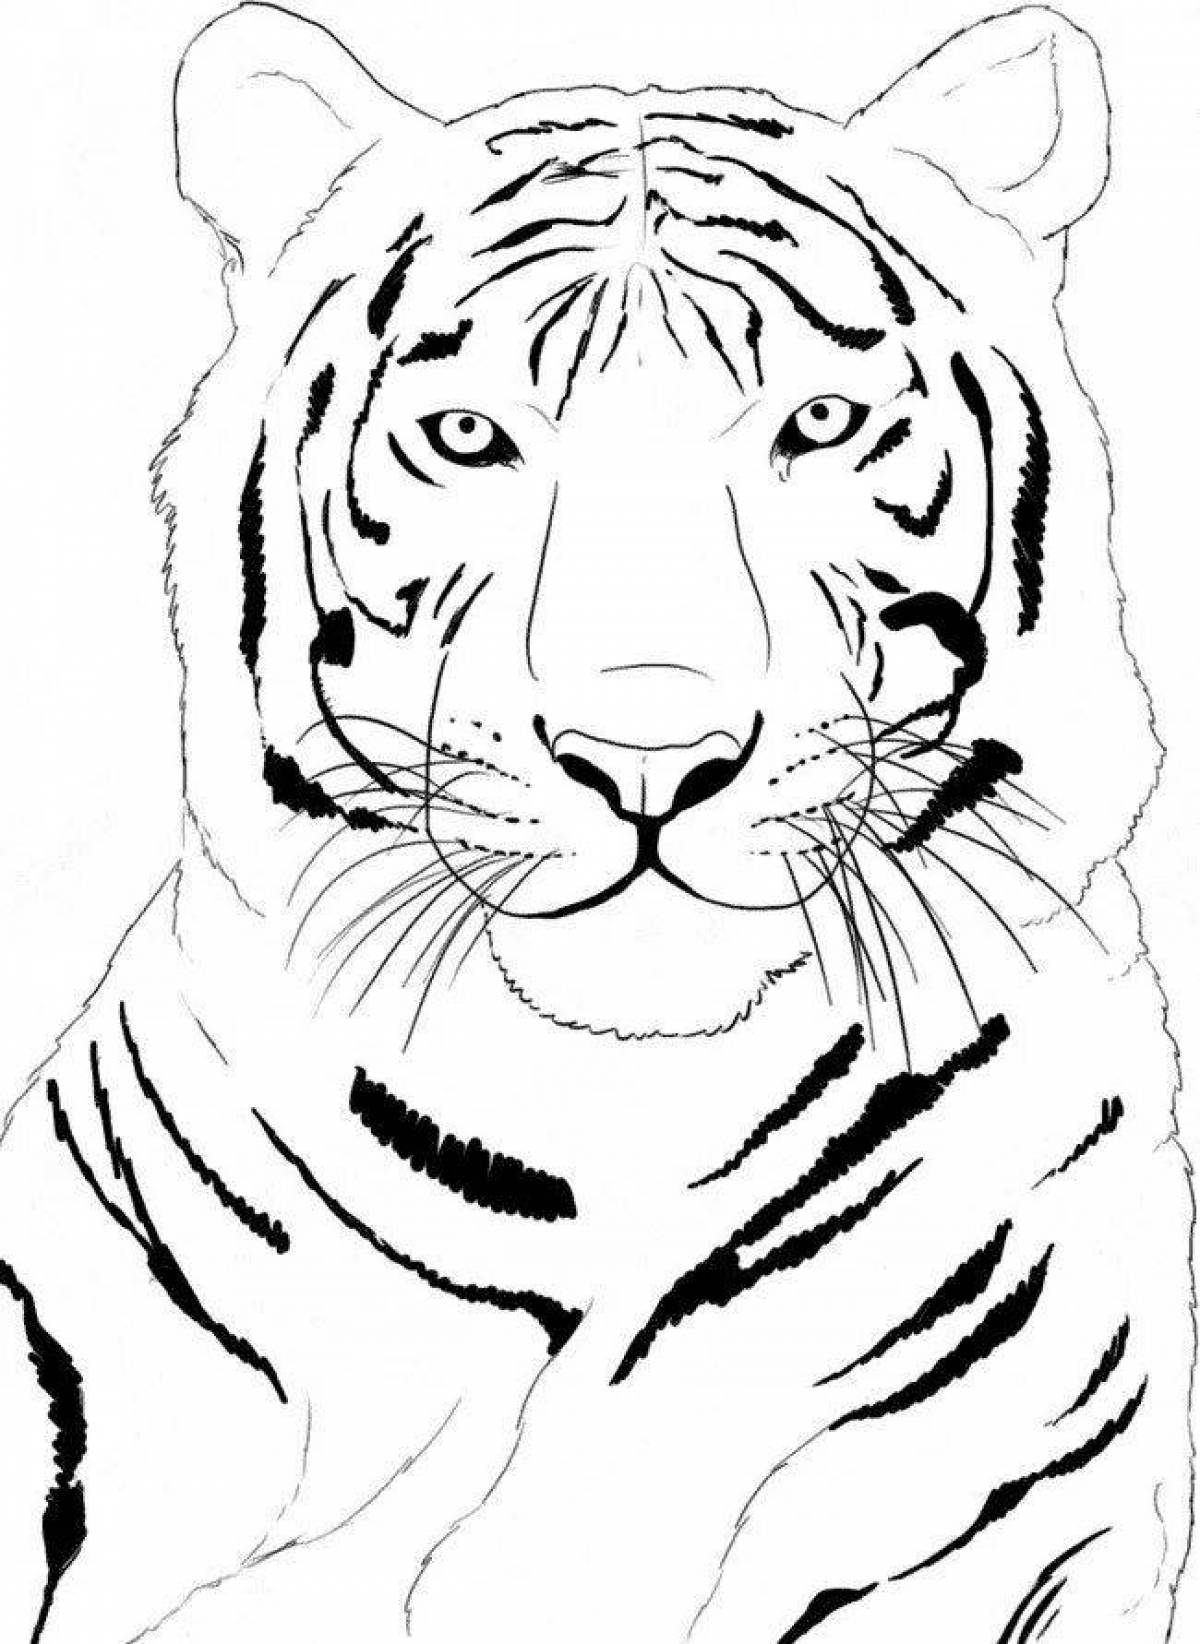 Рисунки в формате jpg. Тигр рисунок. Тигр. Раскраска. Раскраска тигра. Рисунок тигра карандашом.